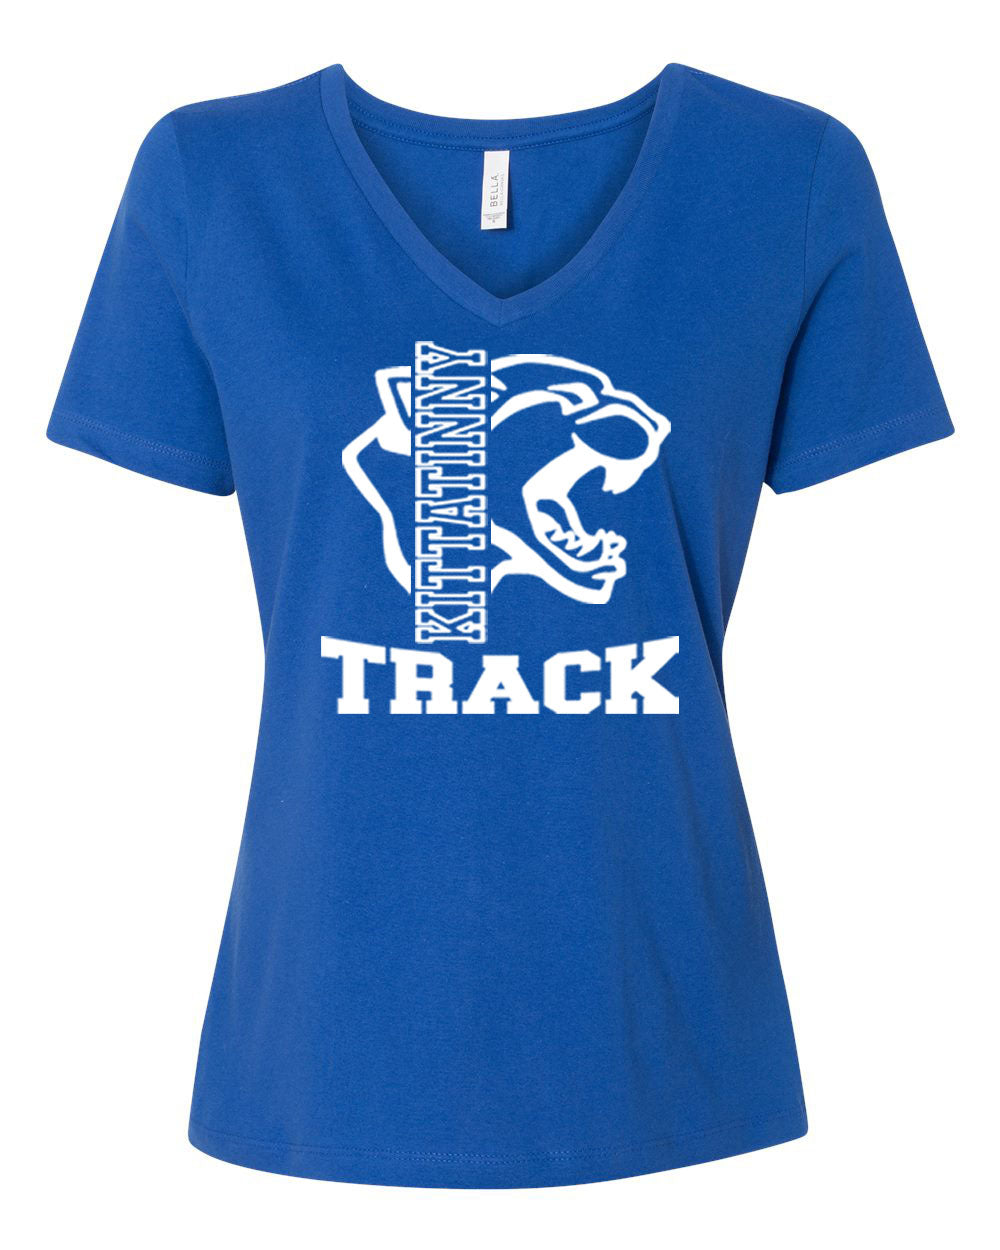 Kittatinny Track Design 8 V-neck T-Shirt